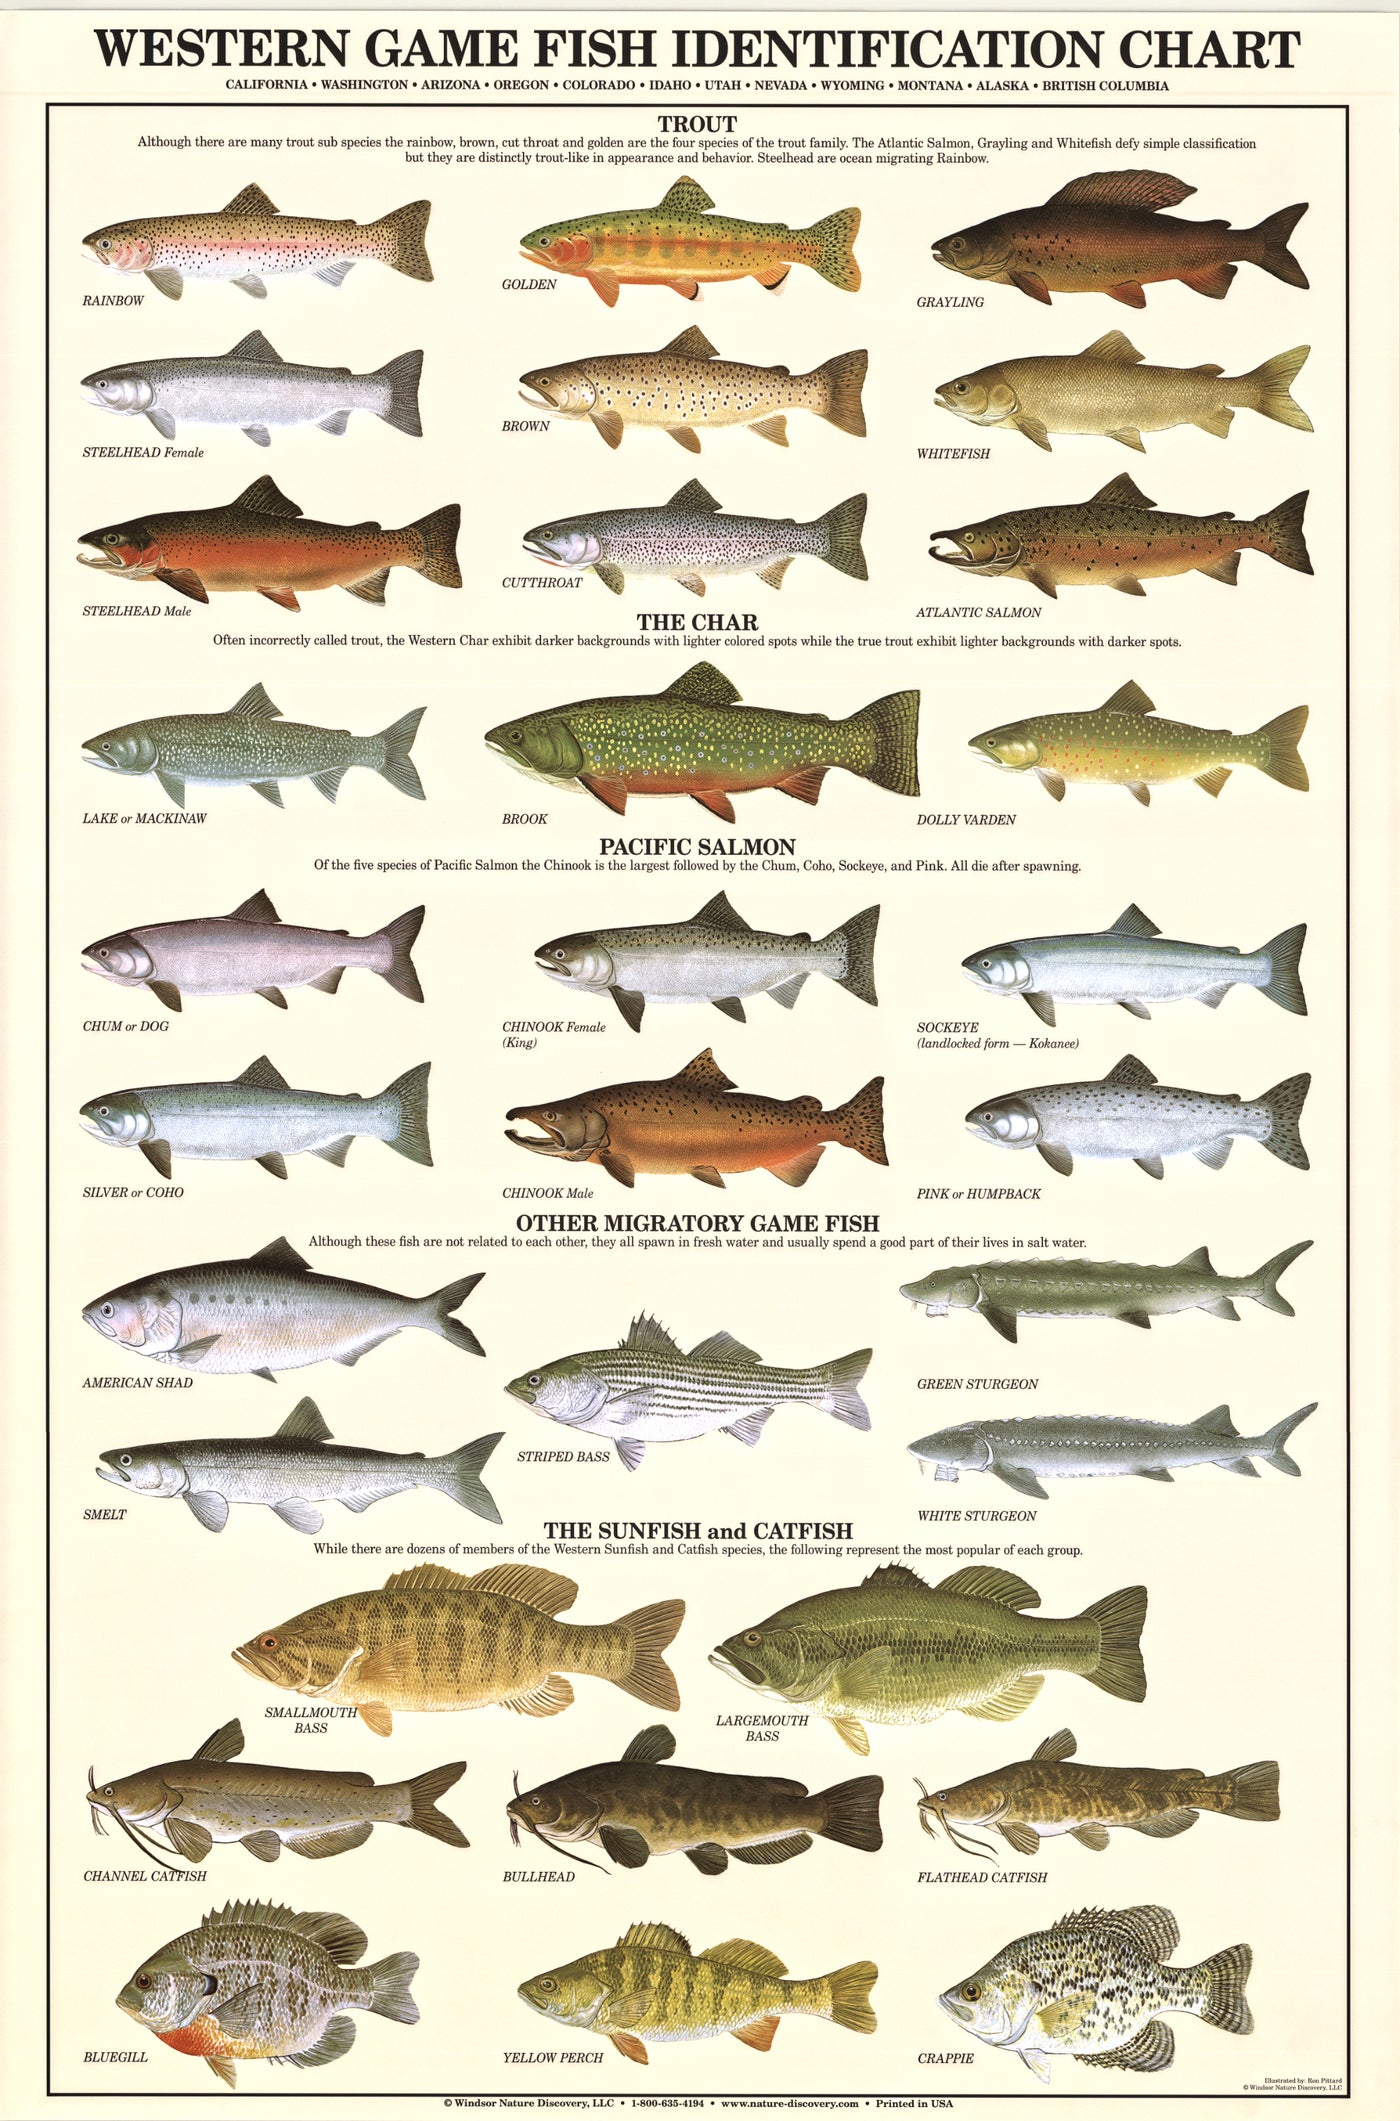 NZ Fish Species Art Print – Your Decal Shop